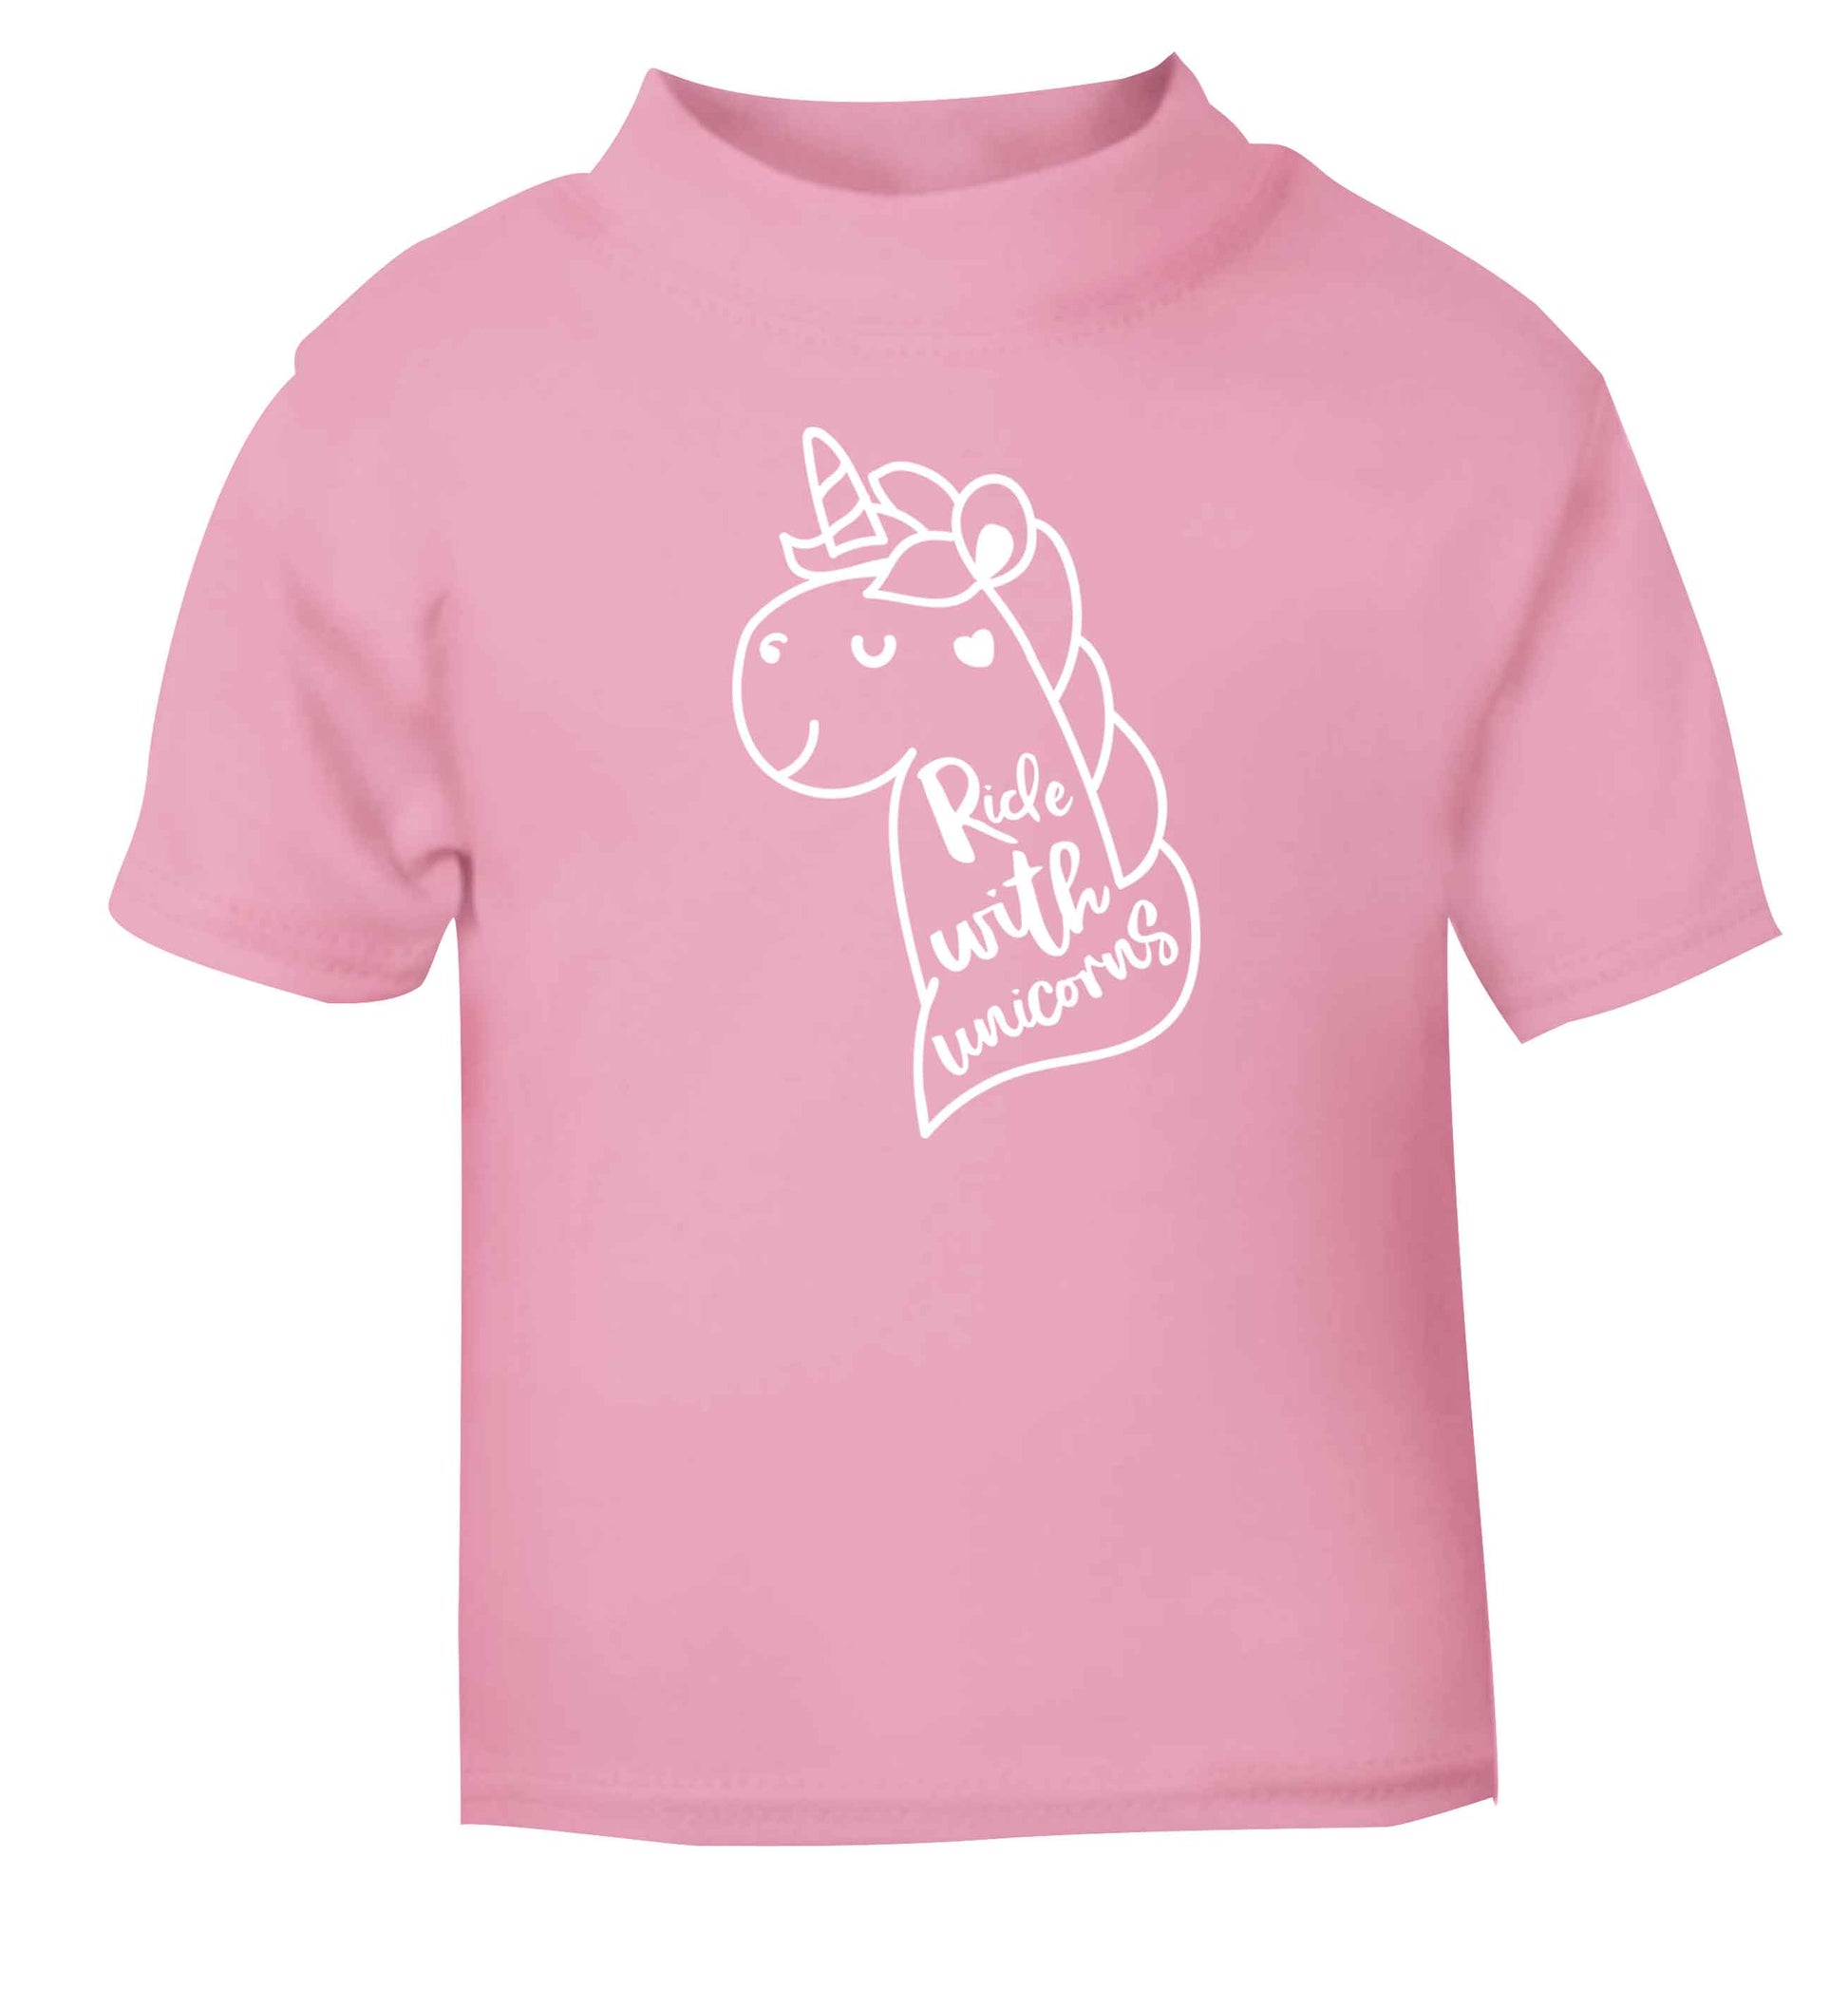 Ride with unicorns light pink Baby Toddler Tshirt 2 Years